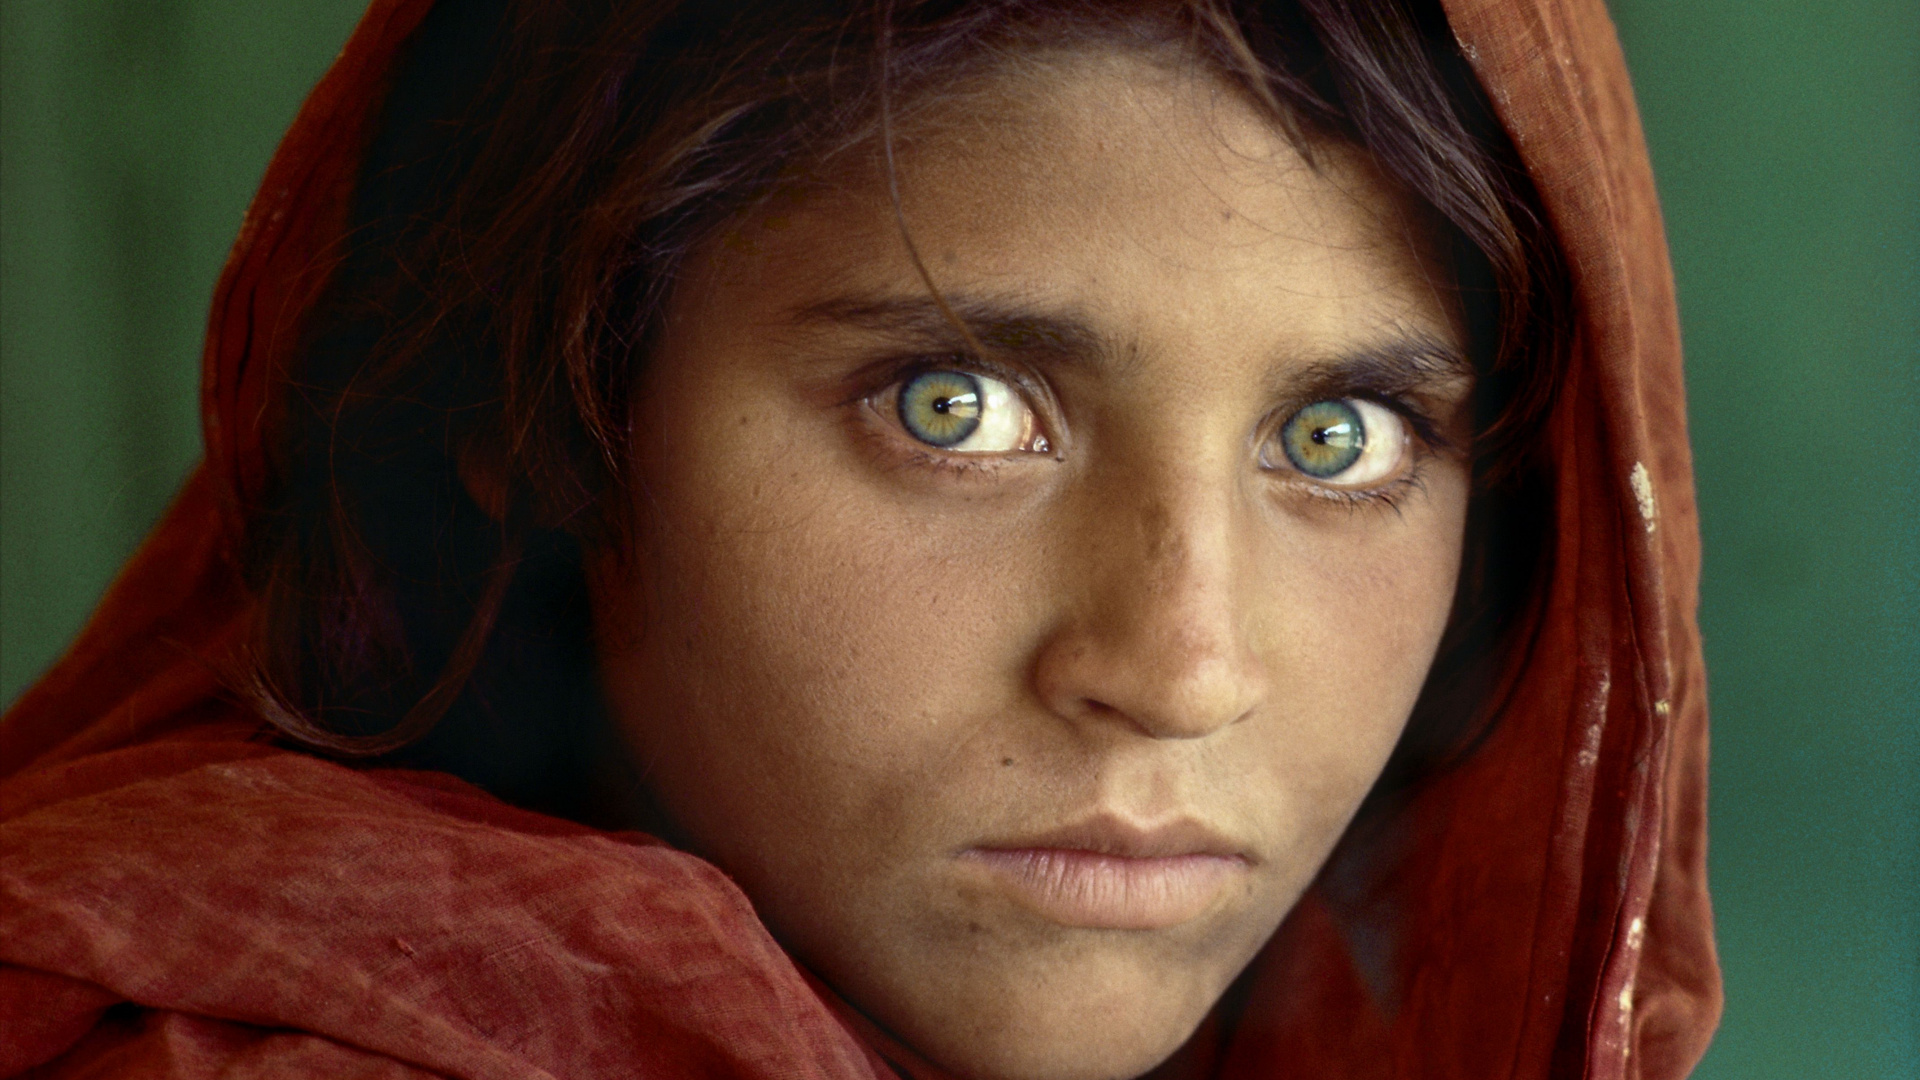 Afghanisches Mädchen, Afghanistan, National Geographic, Gesicht, Auge. Wallpaper in 1920x1080 Resolution